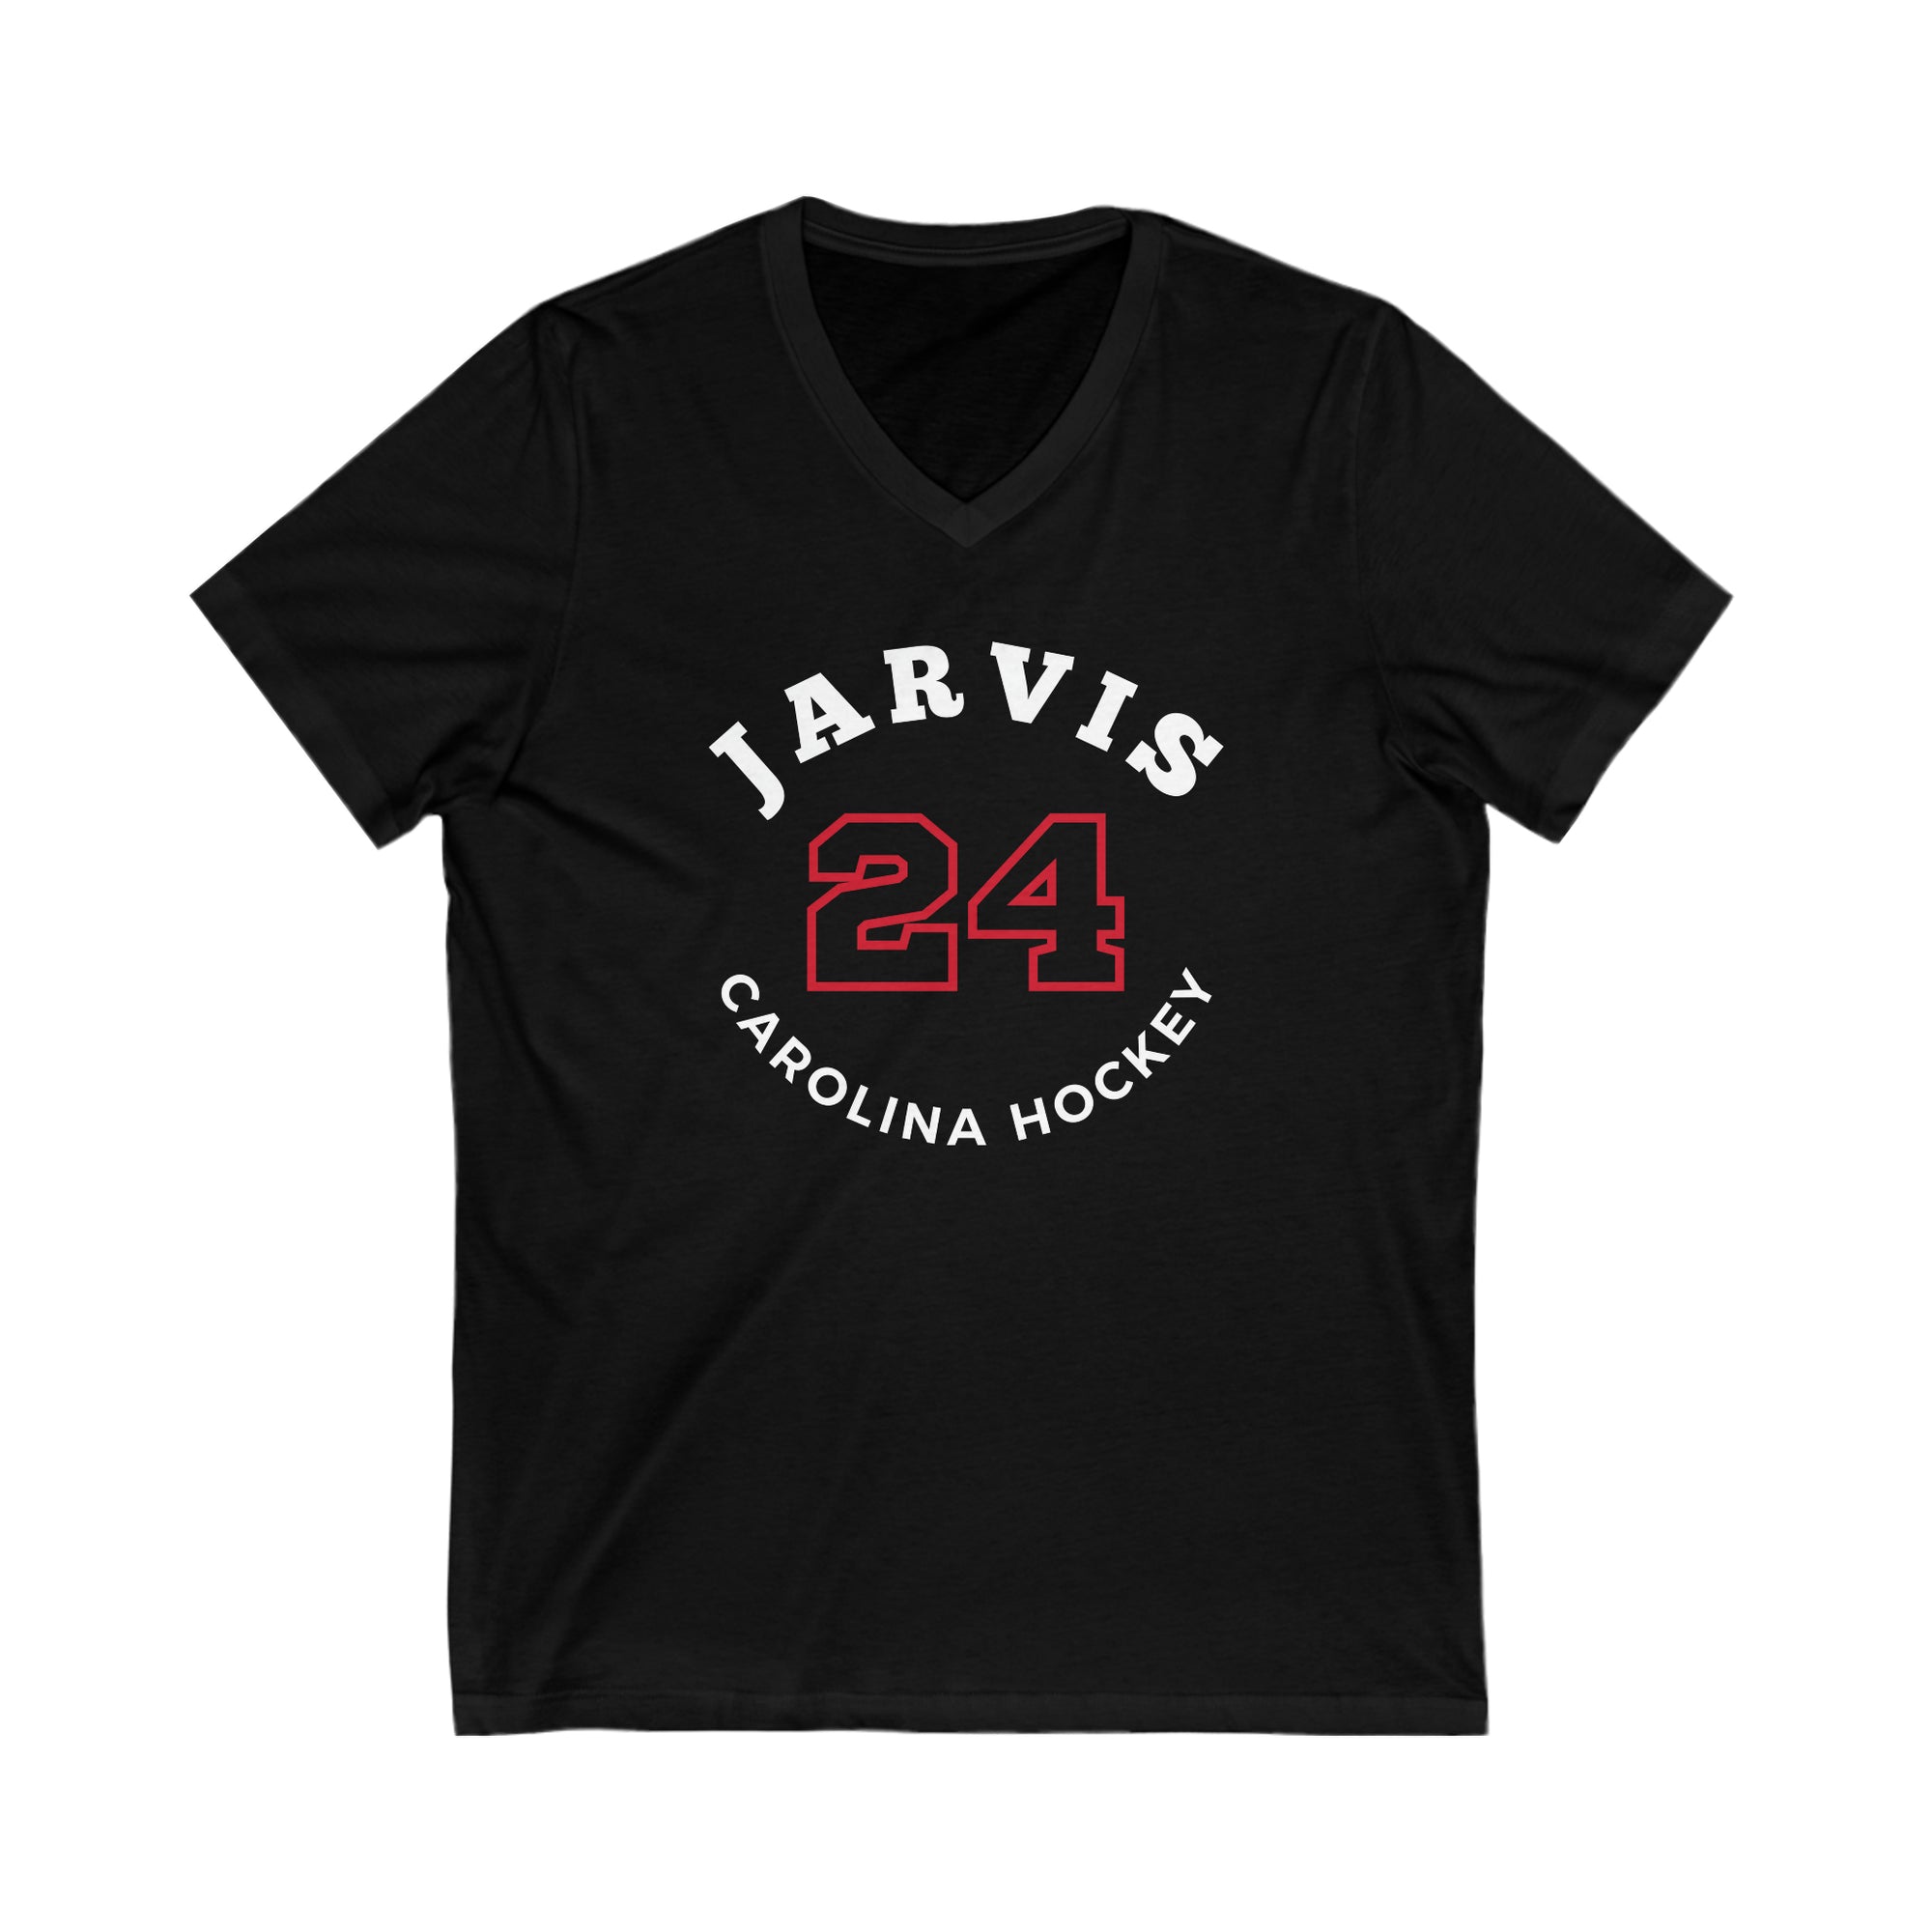 Jarvis 24 Carolina Hockey Number Arch Design Unisex V-Neck Tee